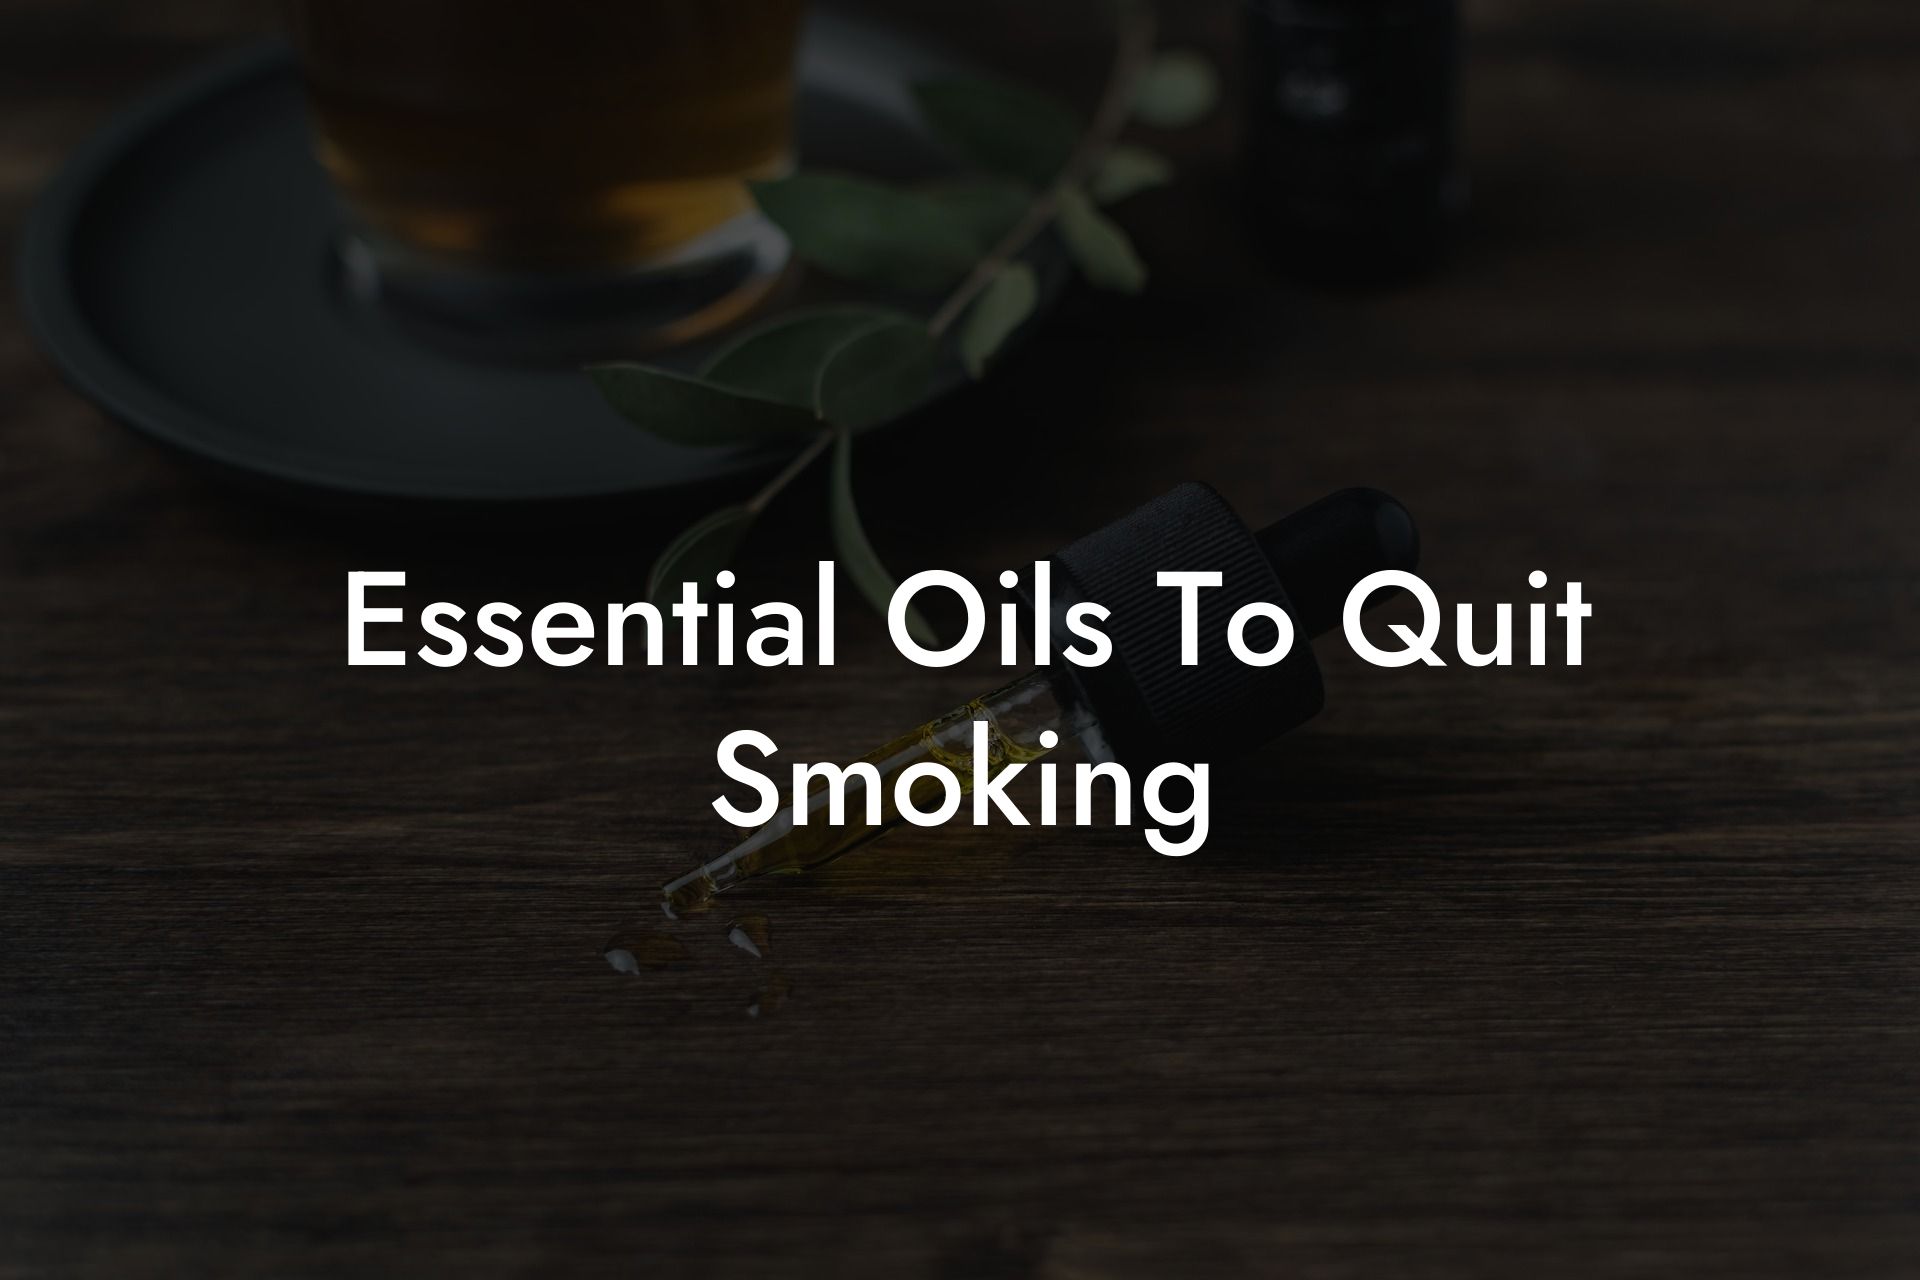 Essential Oils To Quit Smoking